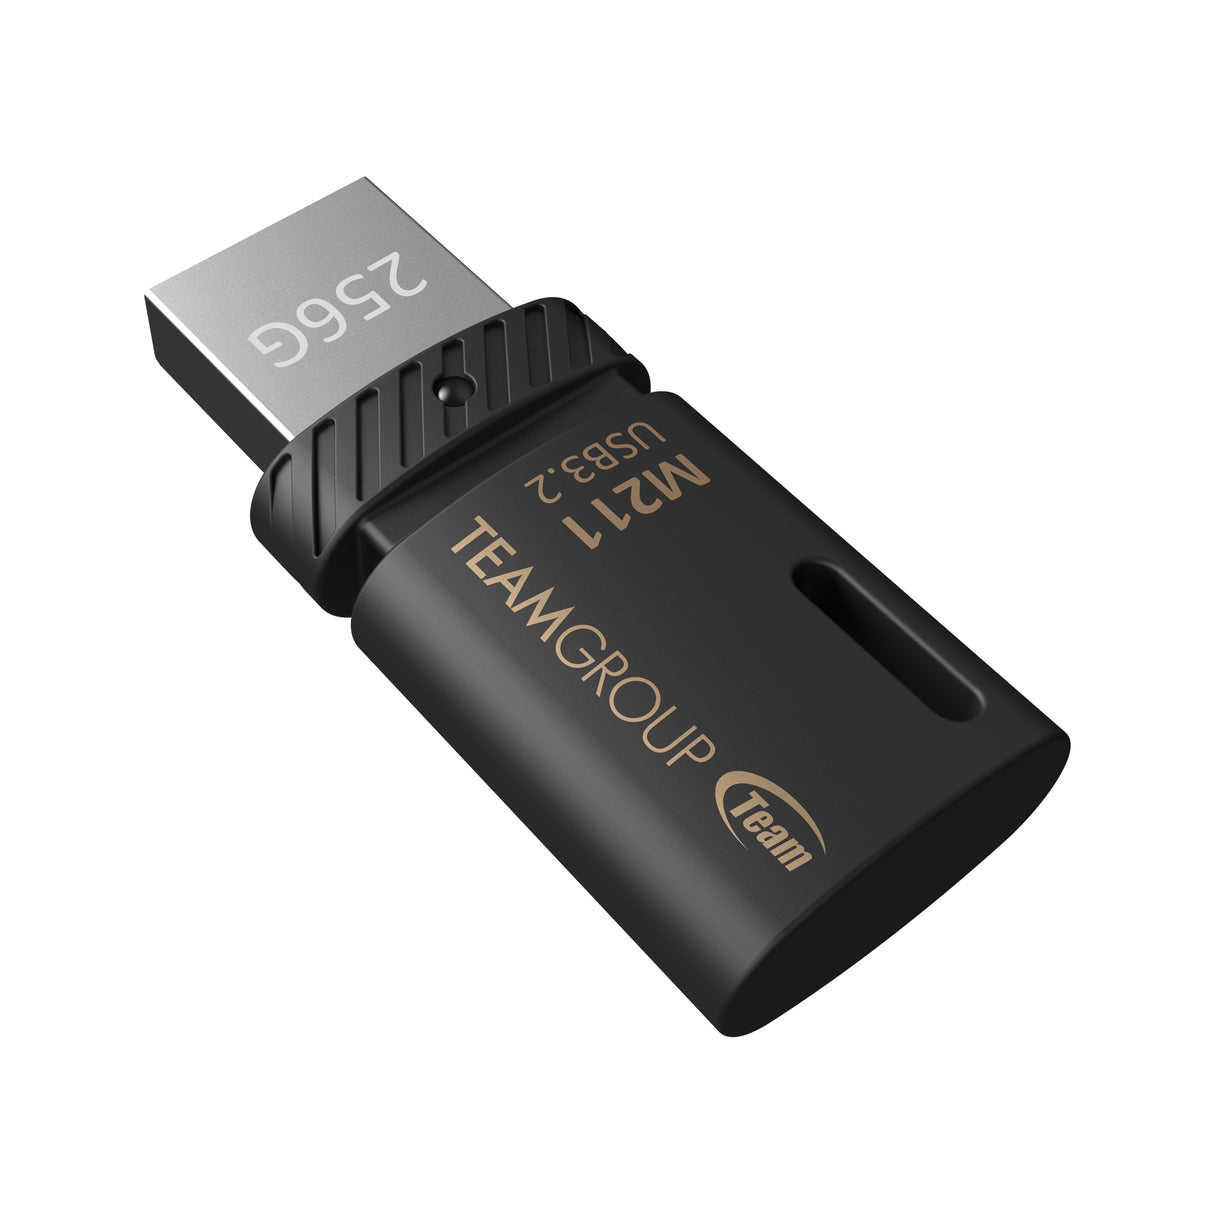 Teamgroup 256GB M211 OTG USB 3.2 spominski ključek